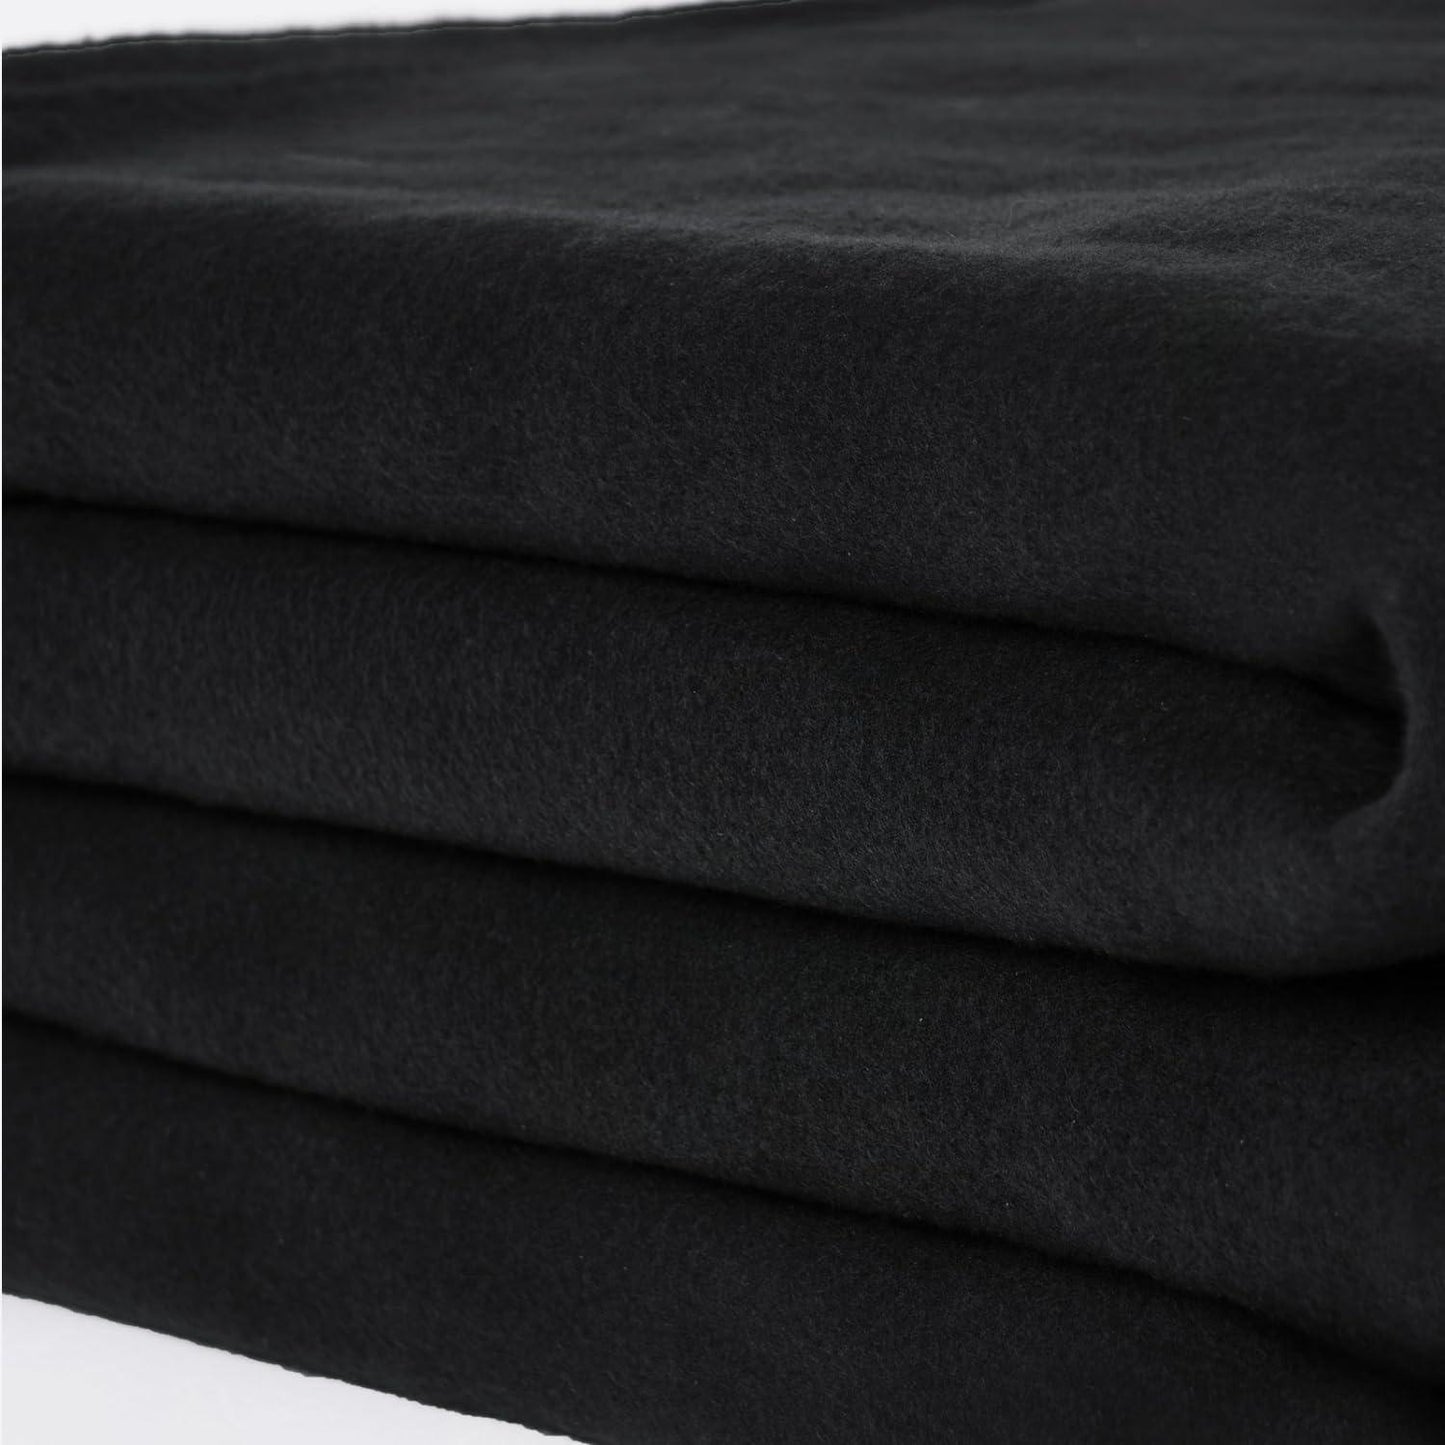 Soft Black Blanket Twin Travel Warm Polar Fleece Blanket Bed Plush for Travel Sofa Adult Kids Microfiber Throw Blanket Black Cheap 50 x60 Fleece Throw for All Season - Loomini